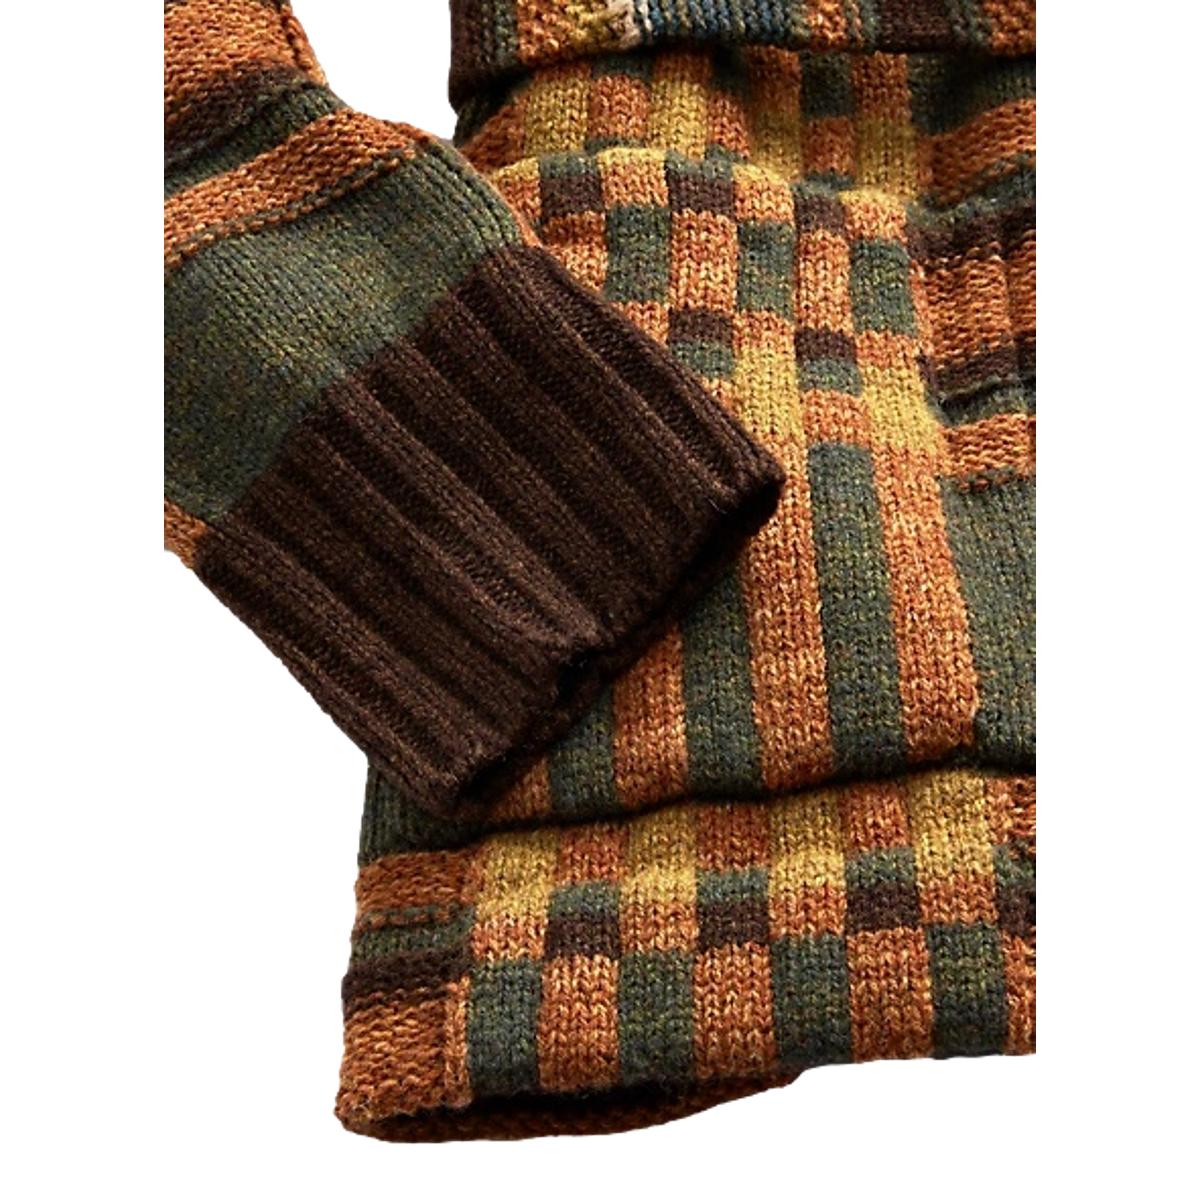 Plaid Wool Ranch Cardigan Green Brown Multi - Sweater